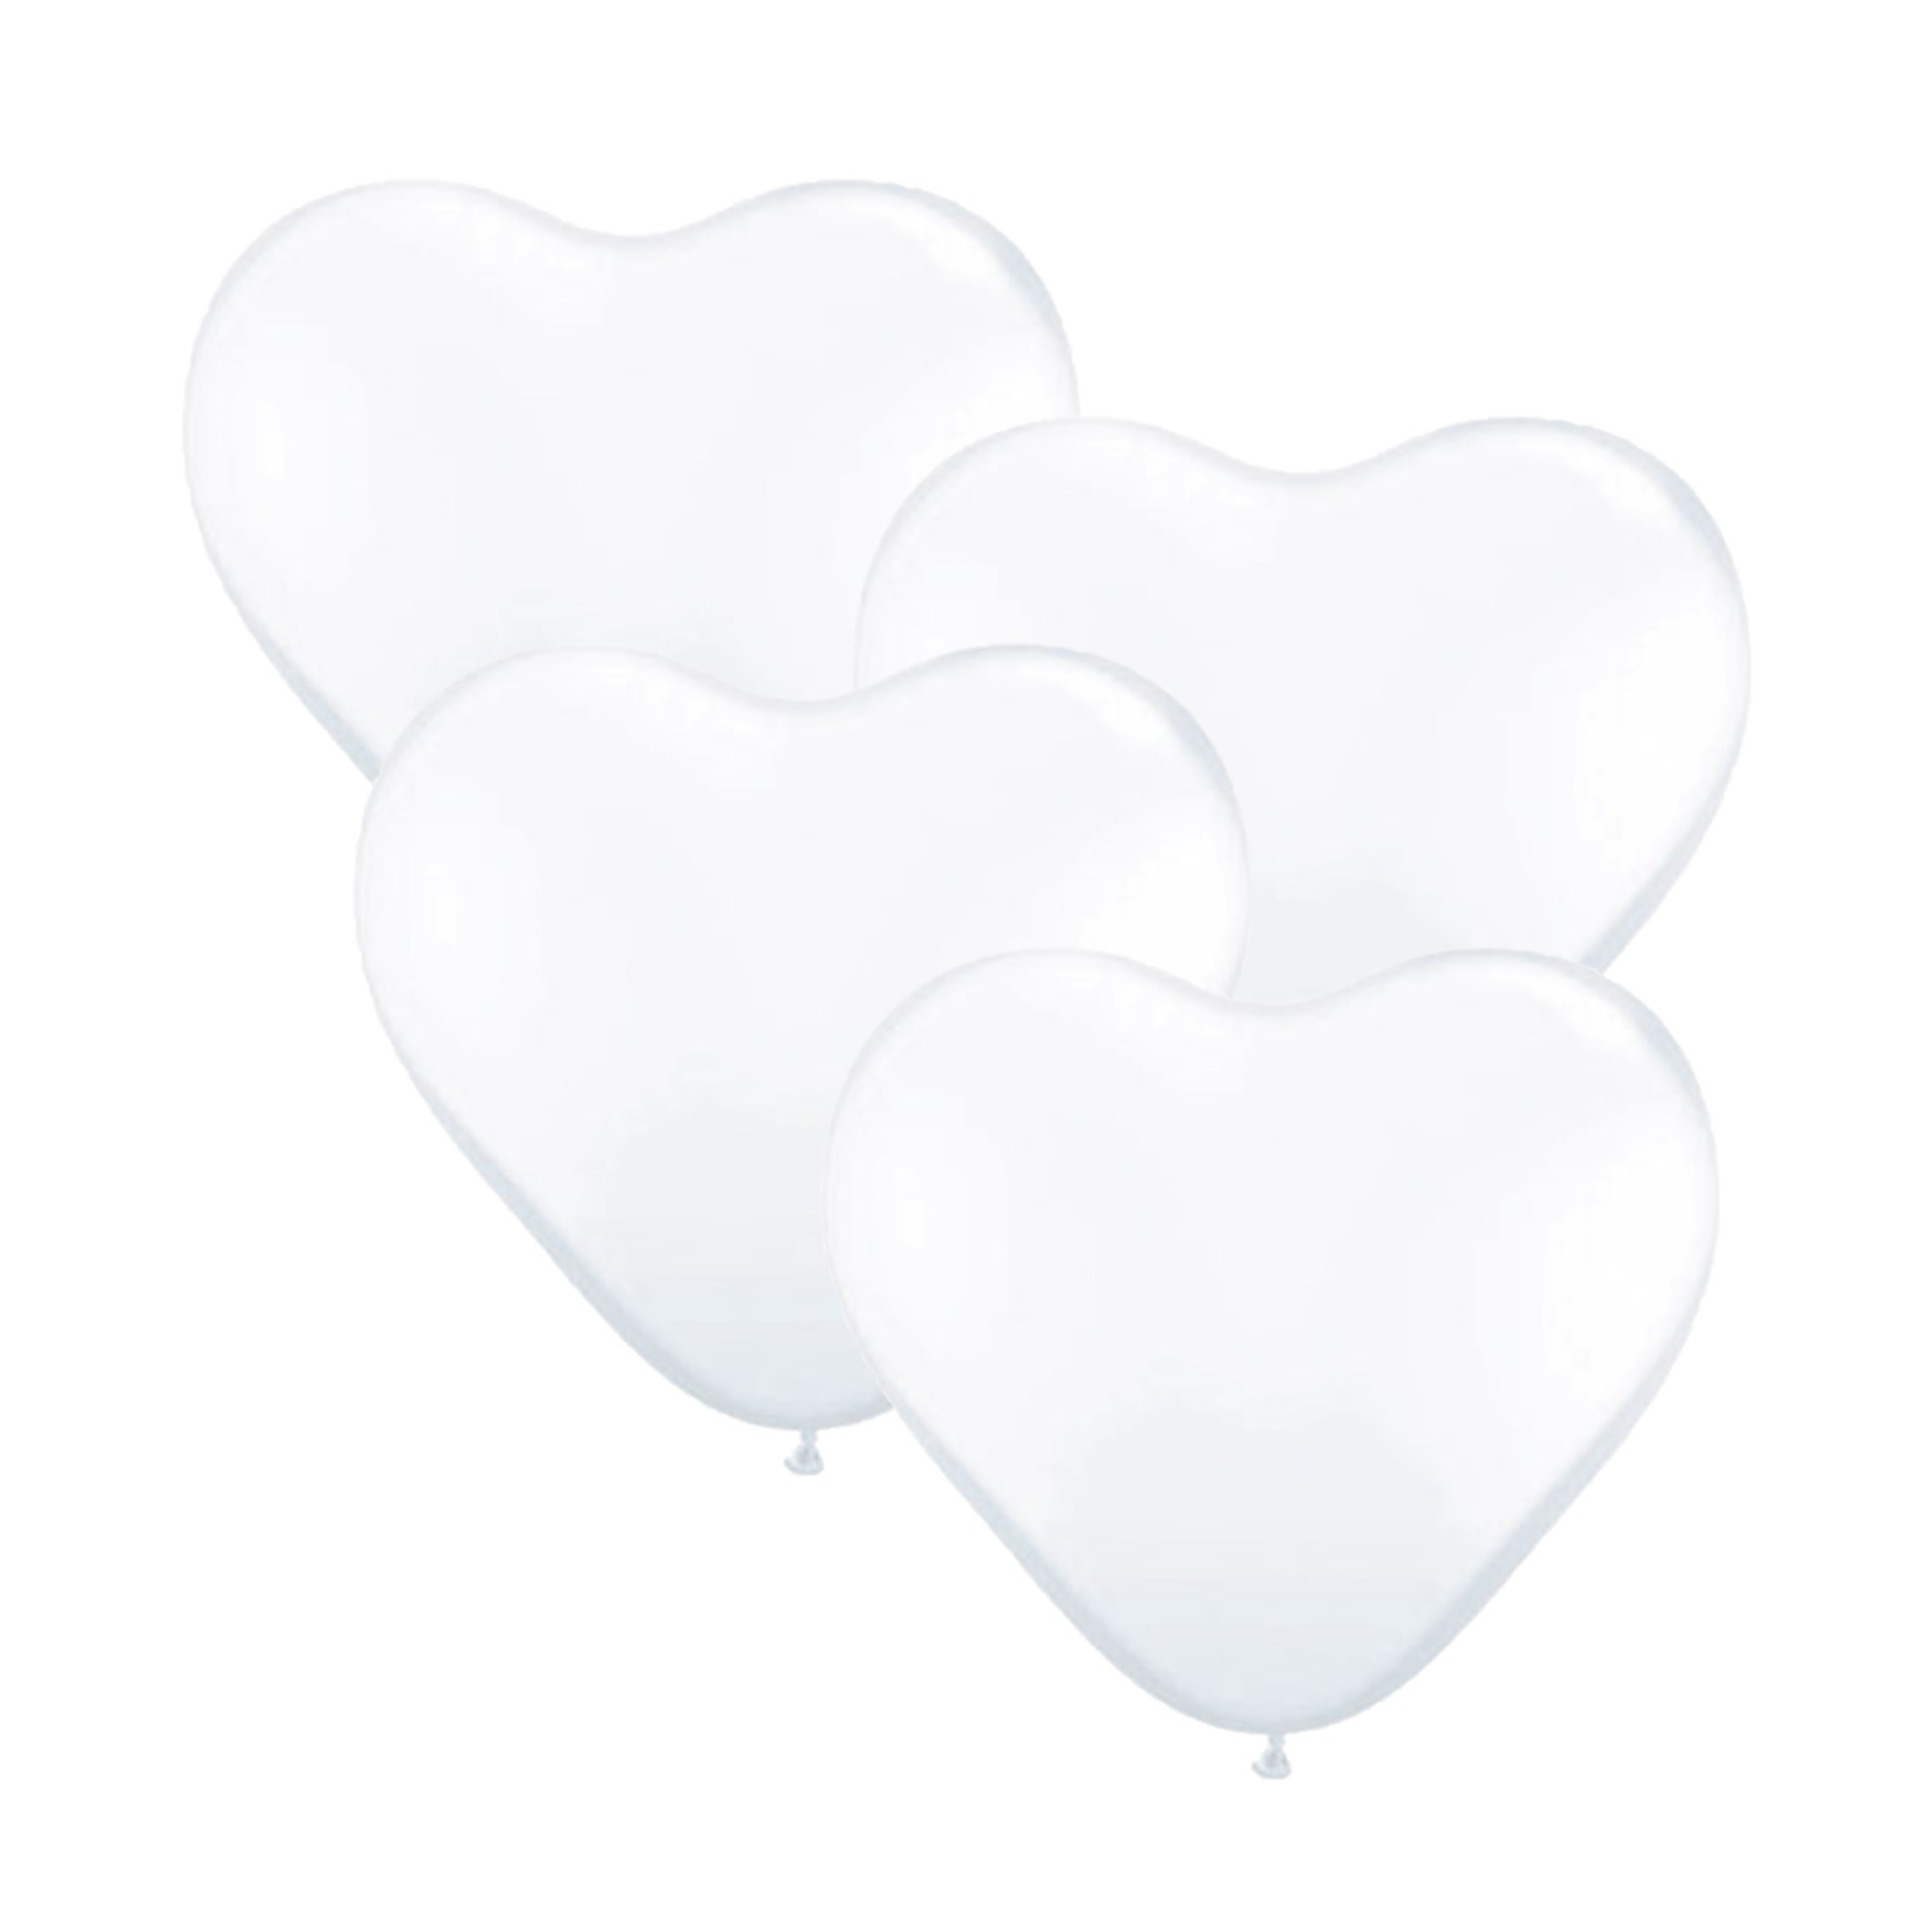 Pakket van 4x stuks qualatex hartjes XL ballonnen wit 90 cm